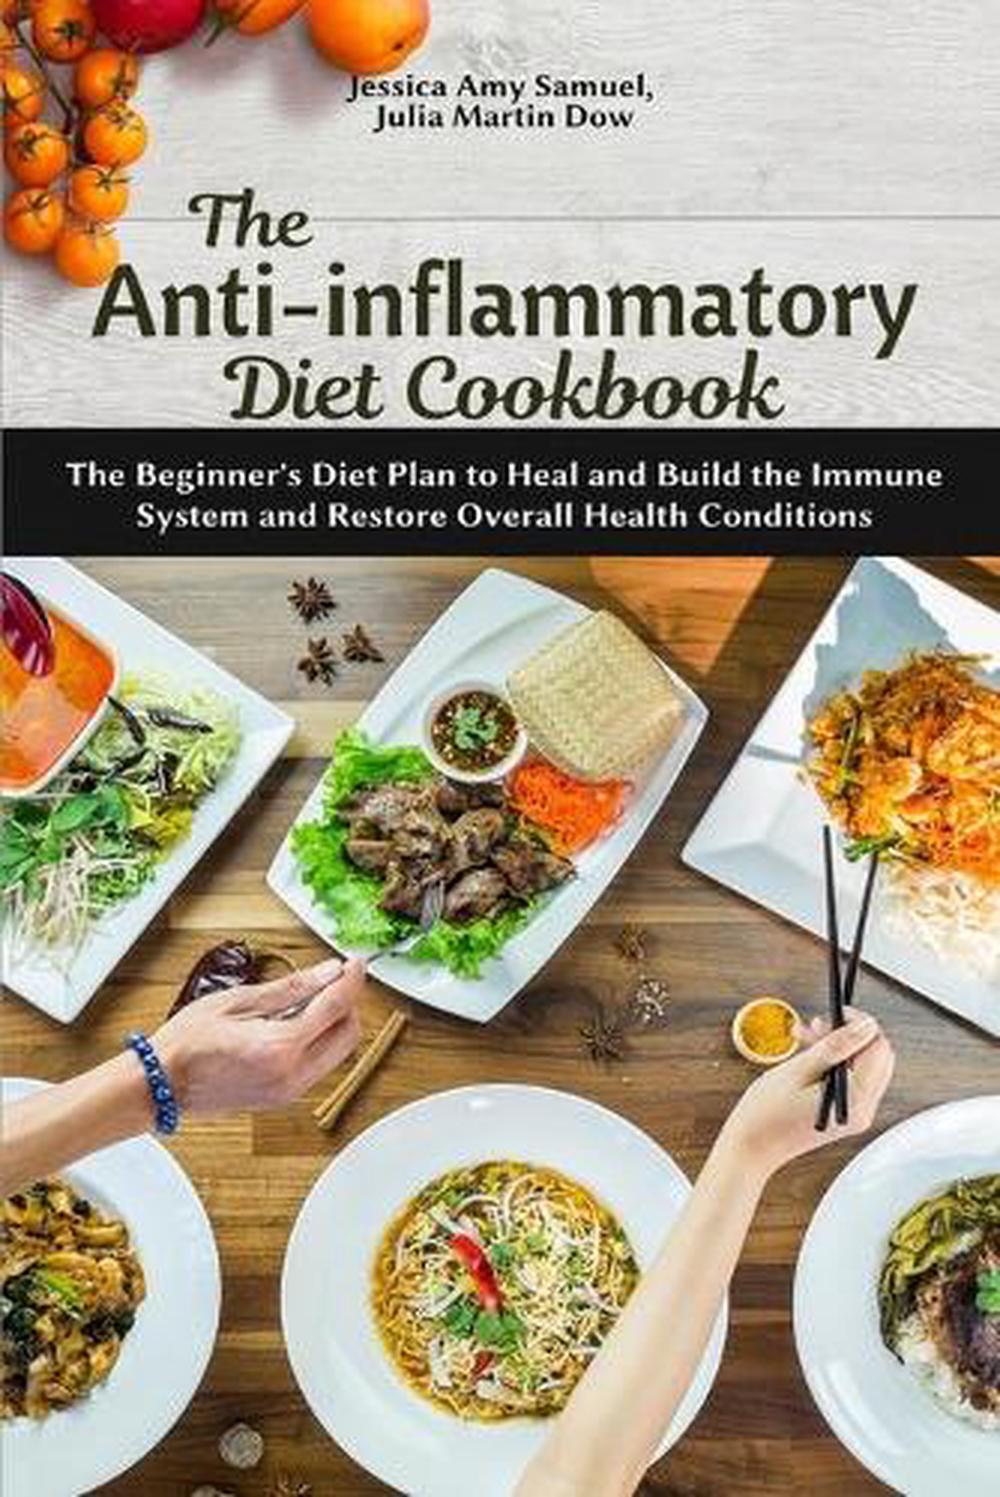 The Anti-Inflammatory Diet Cookbook: The Beginner's Diet Plan to Heal